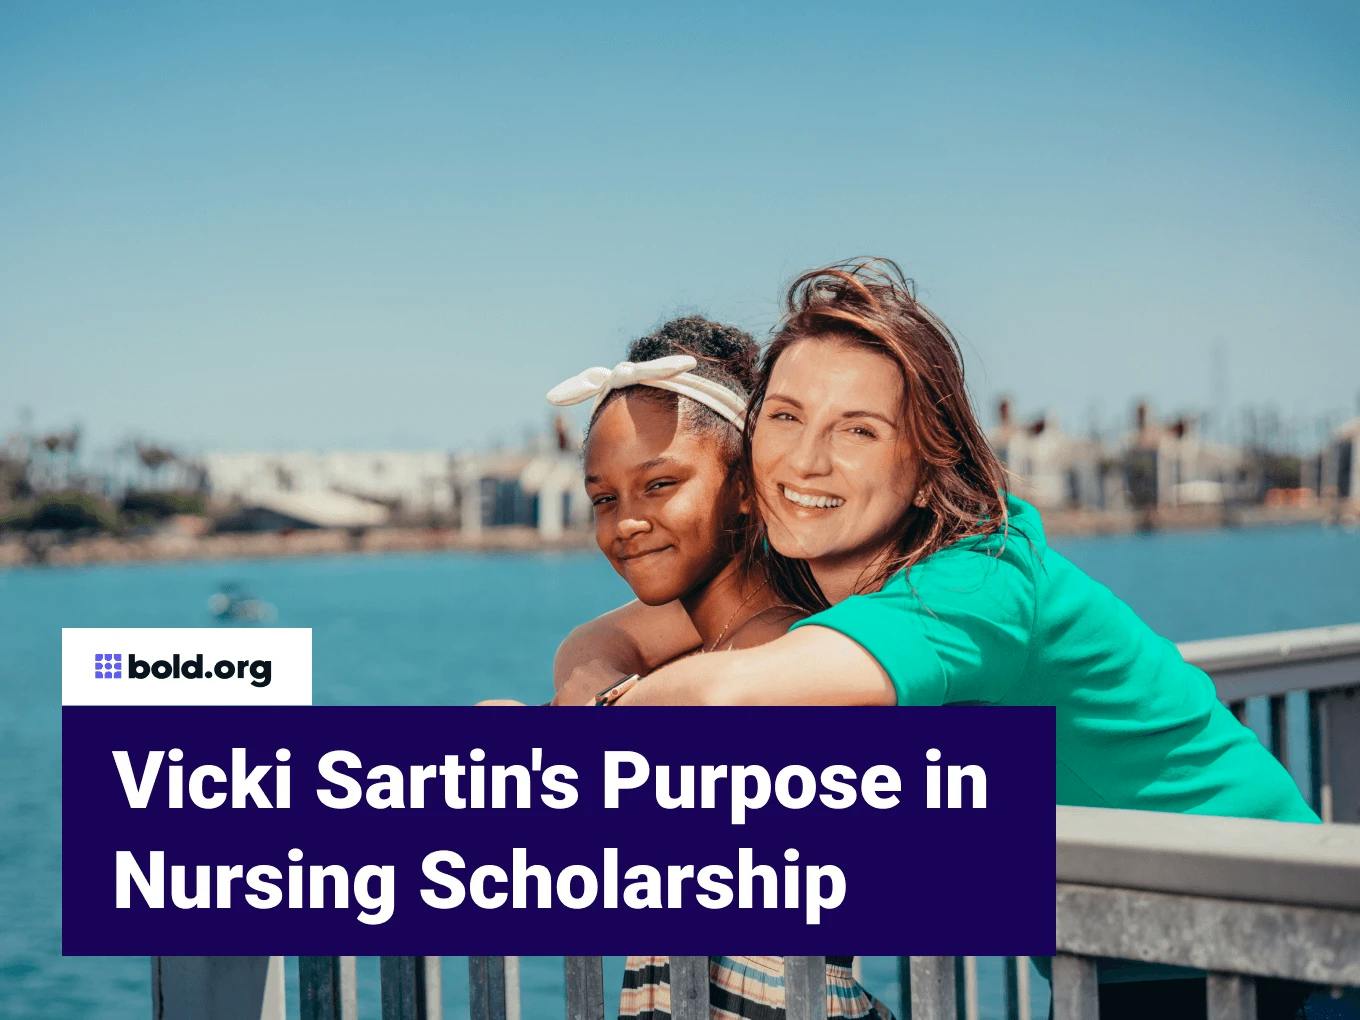 Vicki Sartin's Purpose in Nursing Scholarship